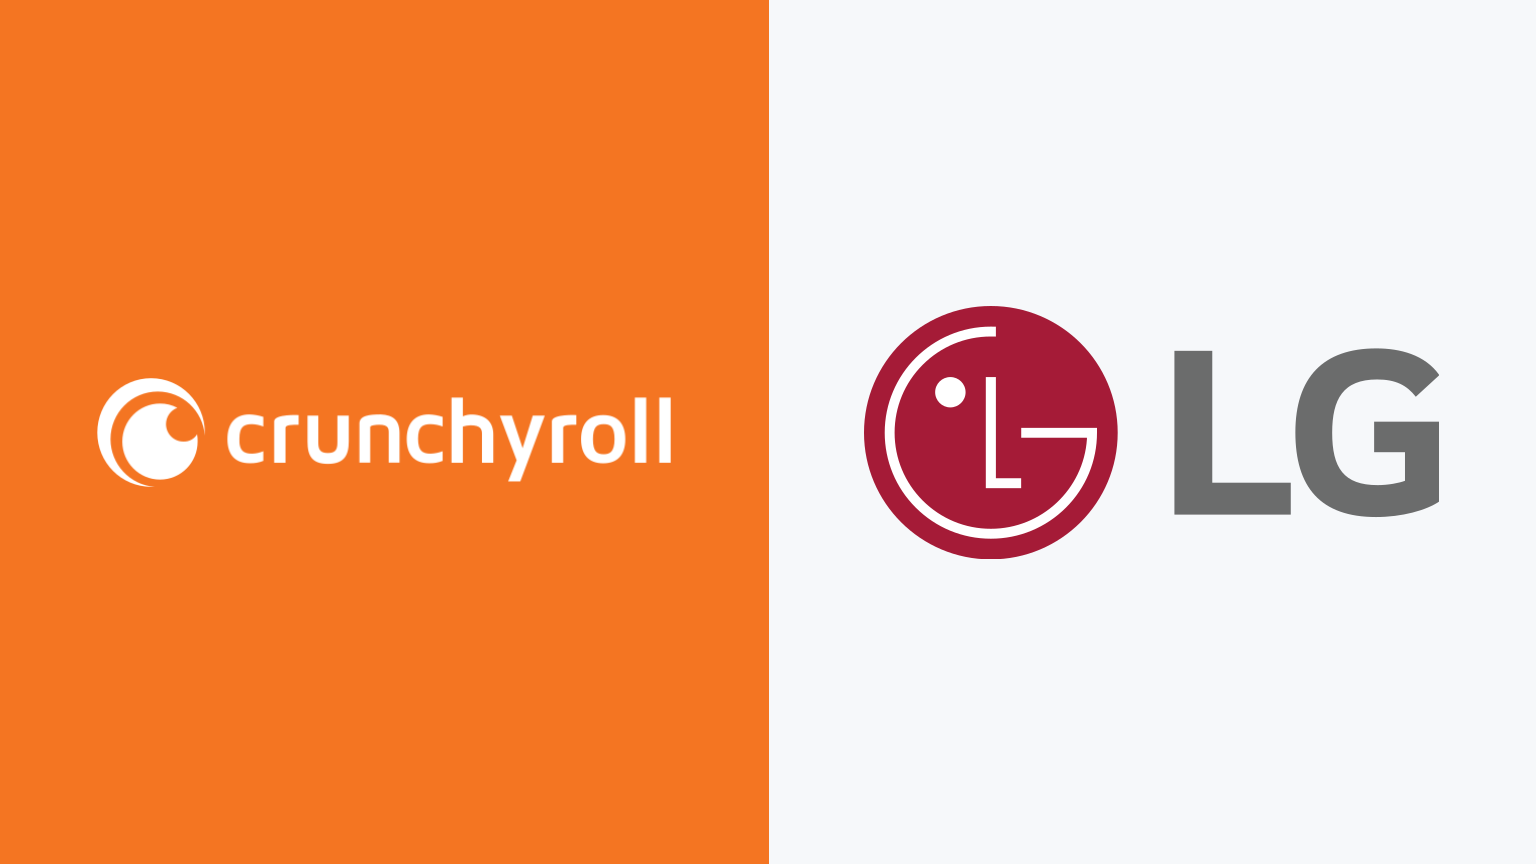 How To Download Crunchyroll On Lg Tv